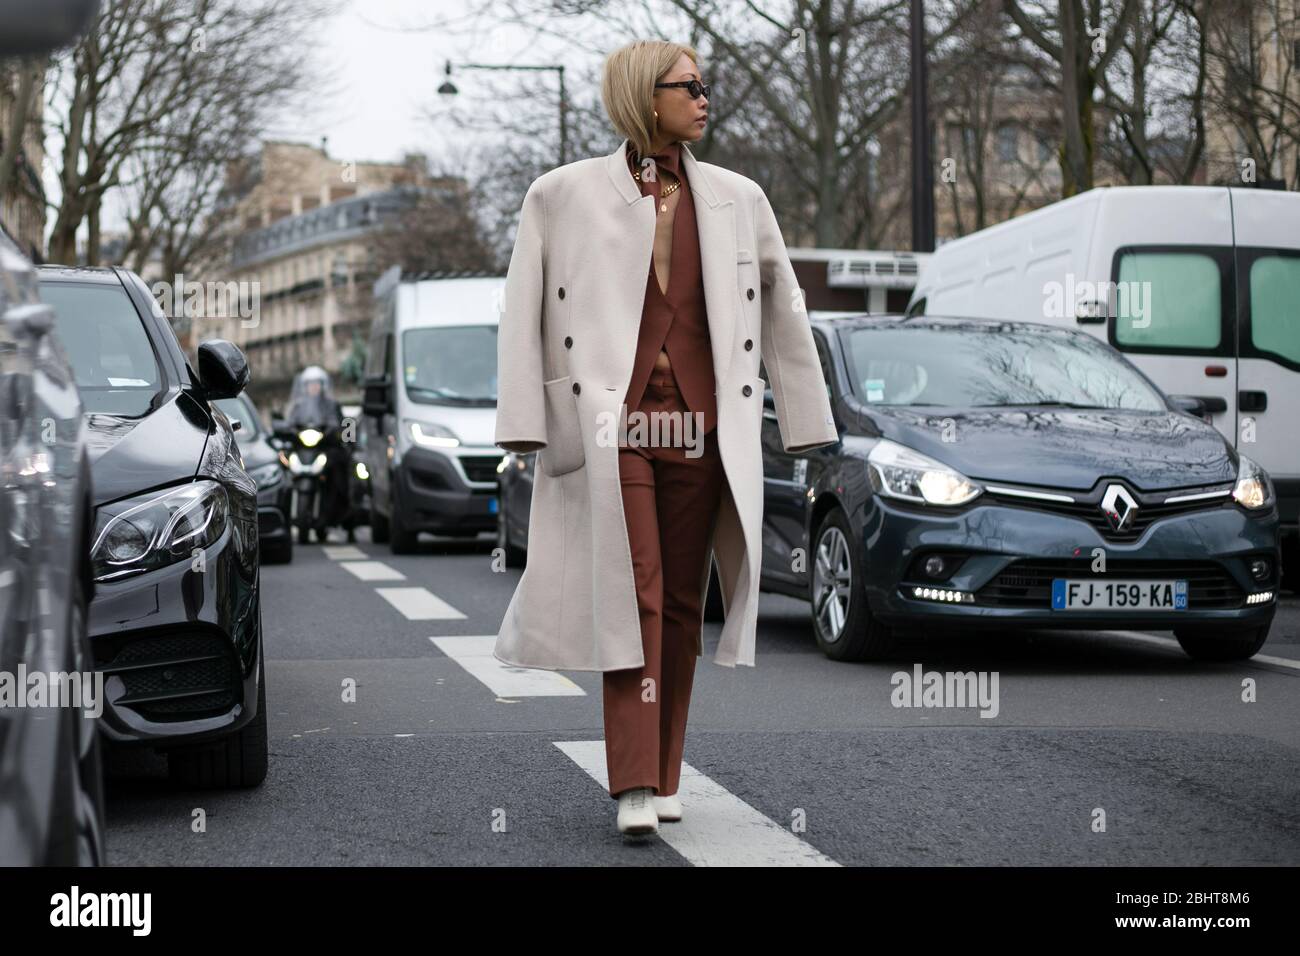 Vanessa Hong attending the Mugler show during Paris  Fashion Week Feb 26,2020- Photo: Runway Manhattan/Valentina Ranieri  ***For Editorial Use Only*** Stock Photo